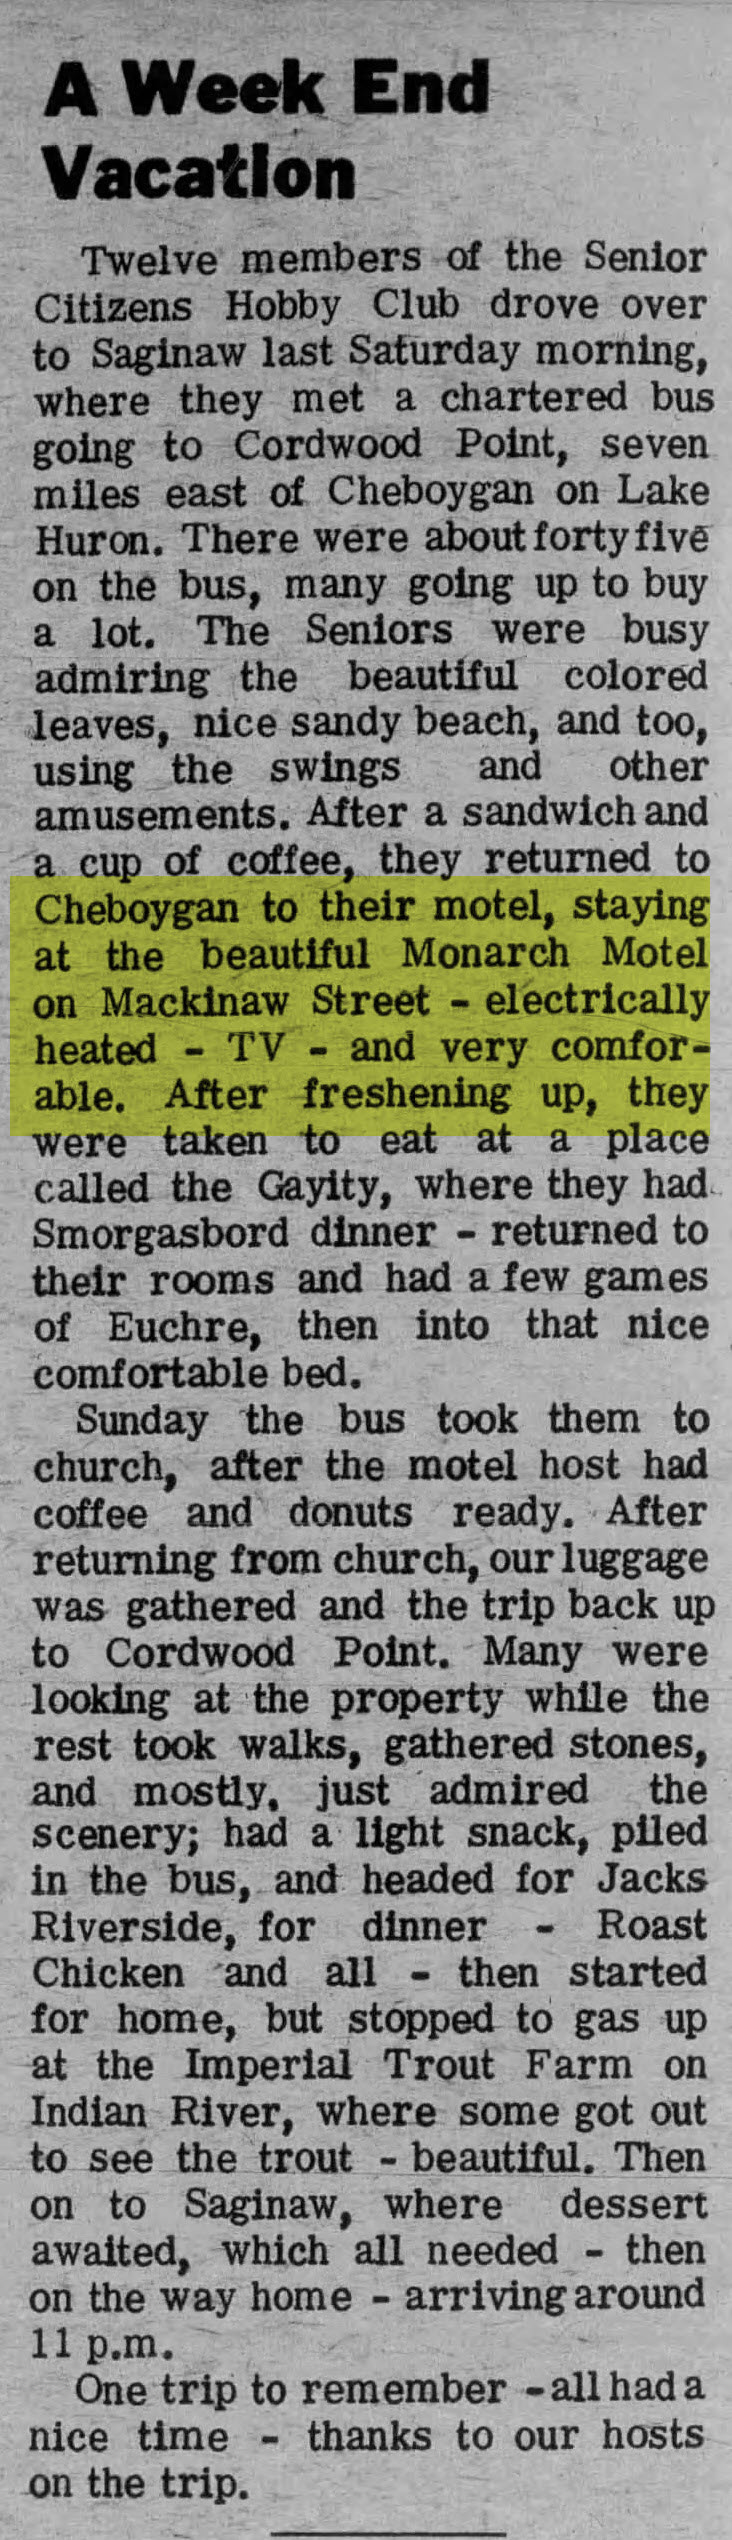 Monarch Motel - Oct 24 1968 Article